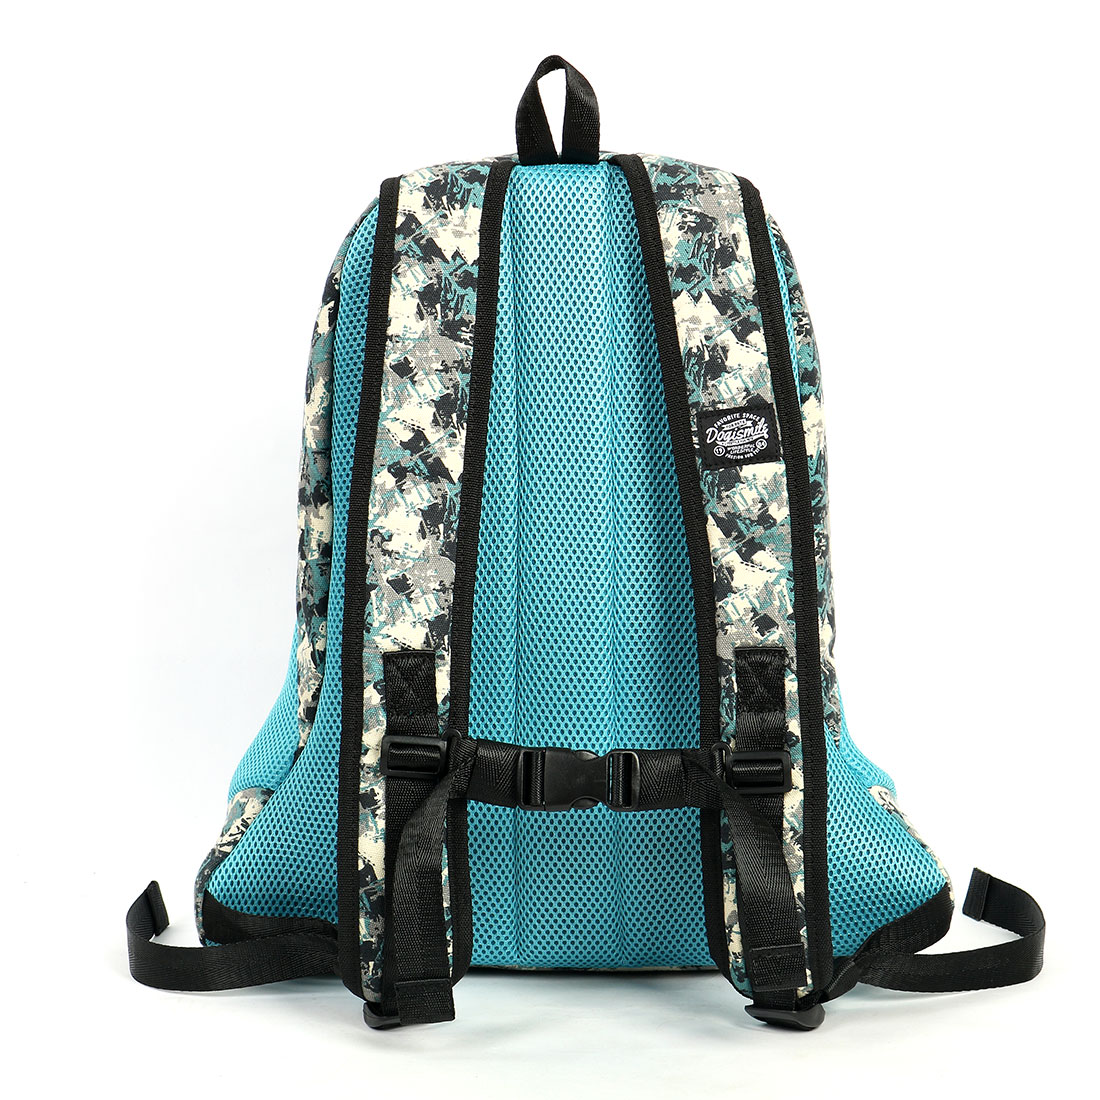 Unique Bargains Mesh and Canvas Dog Backpack, Light Blue - image 4 of 7